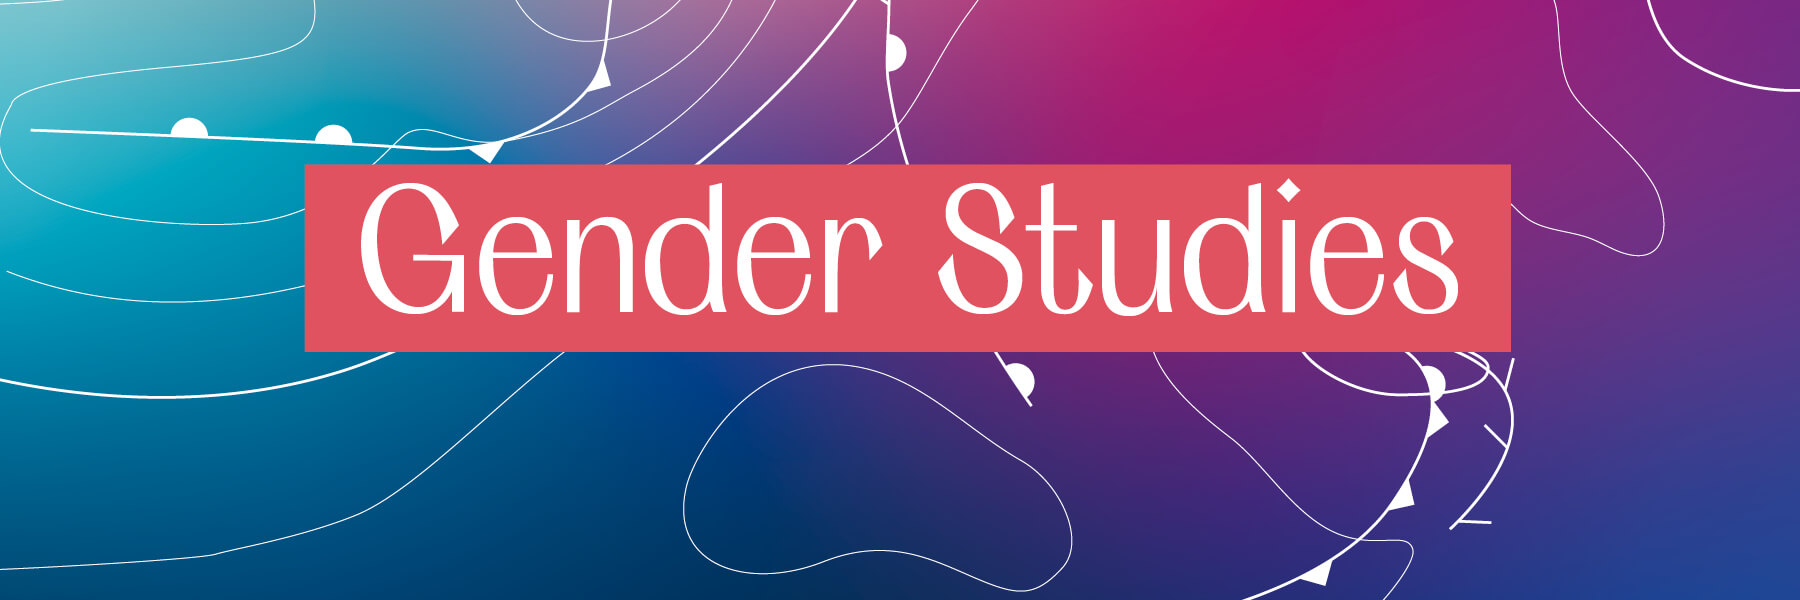 FES Gender Glossar - Gender Studies